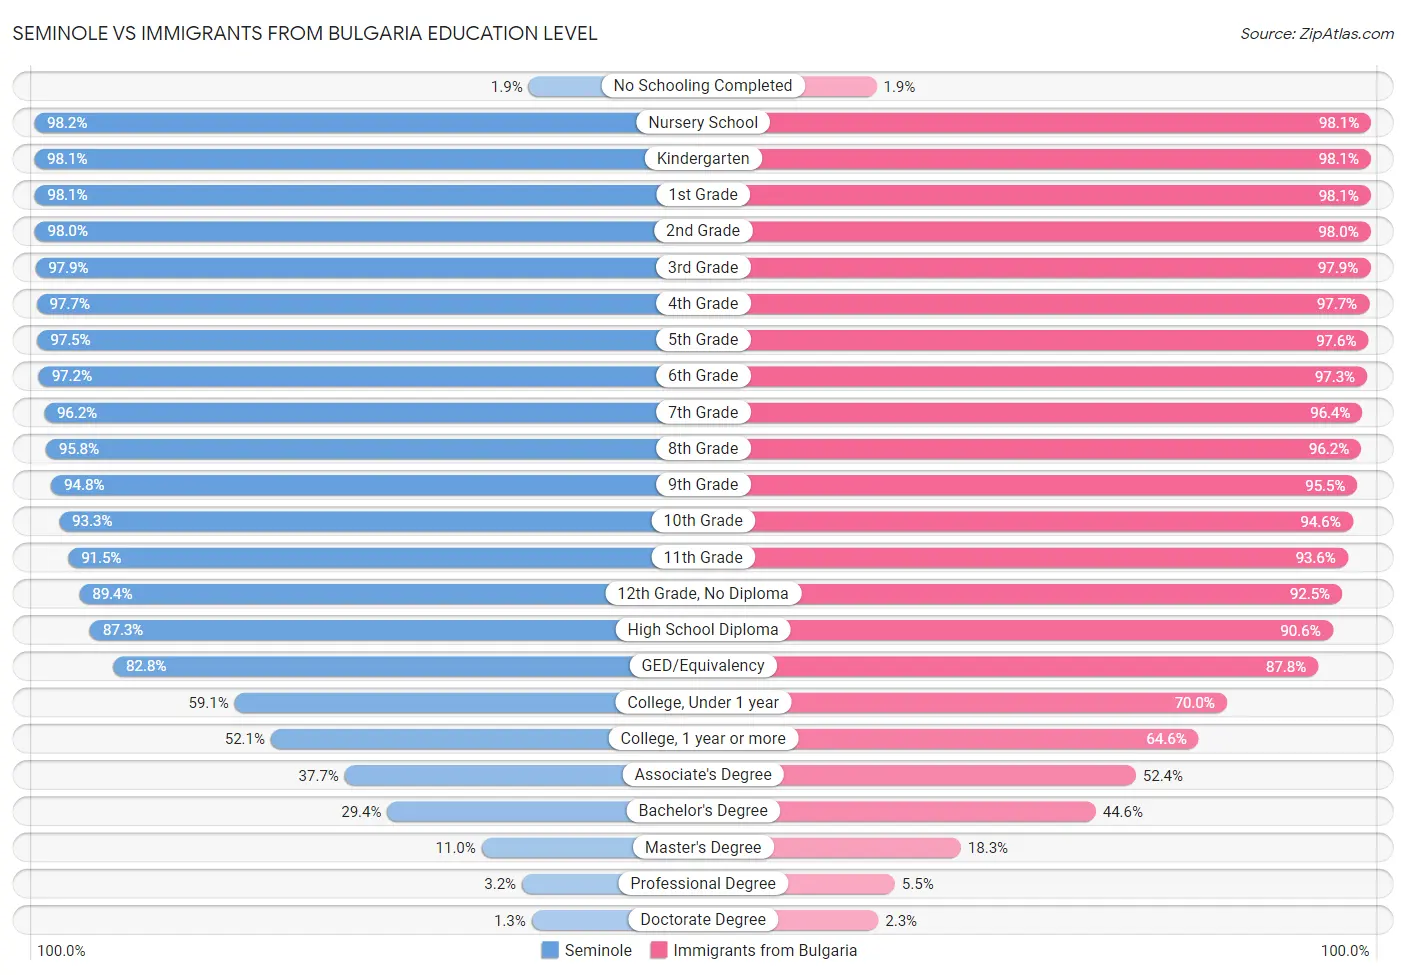 Seminole vs Immigrants from Bulgaria Education Level